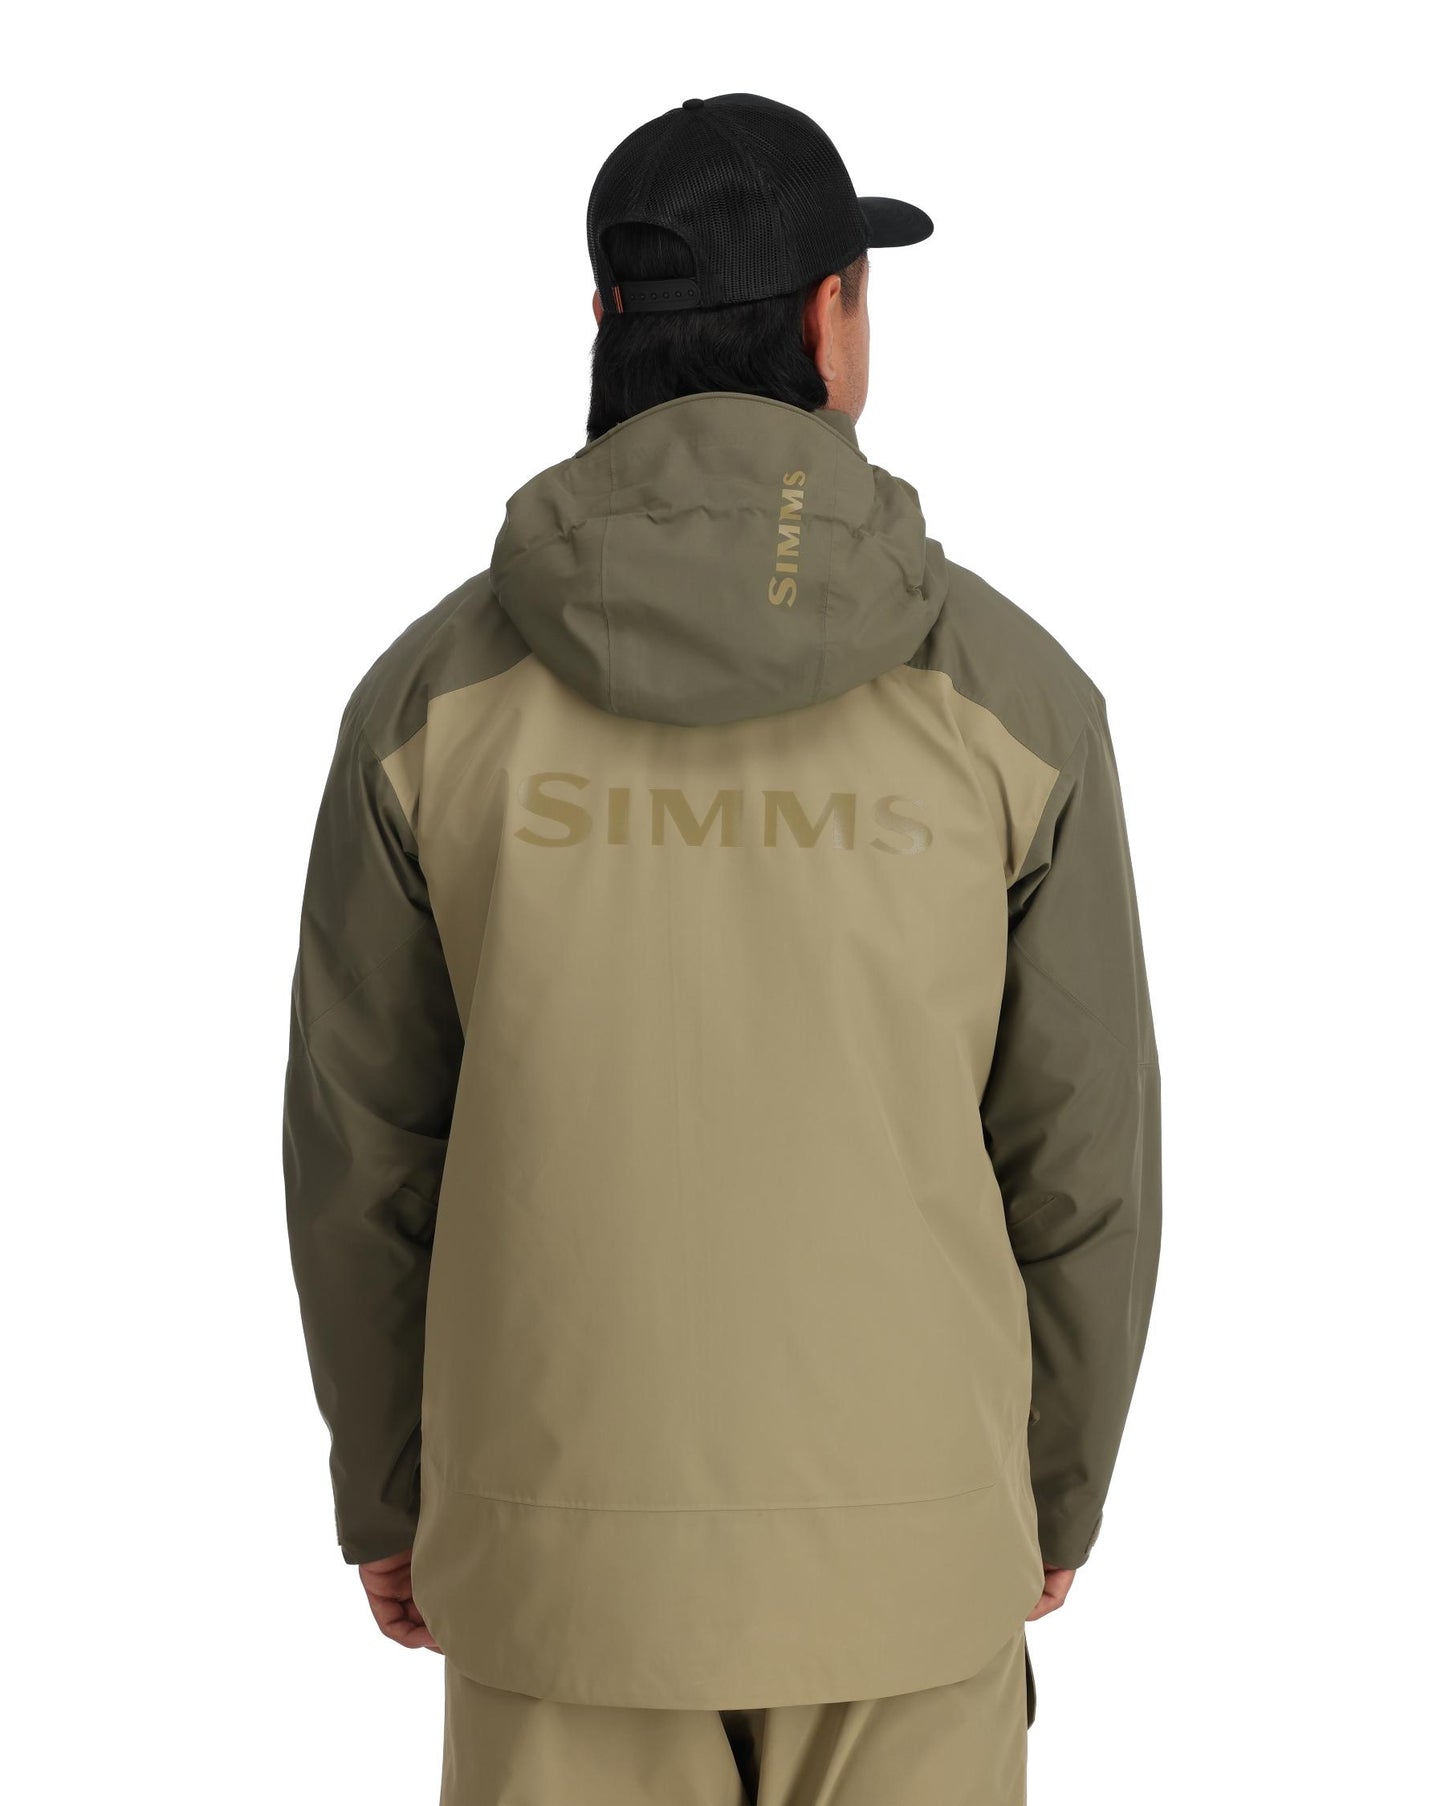 Simms Men's Challenger Jacket - XXL - Regiment Camo Olive Drab